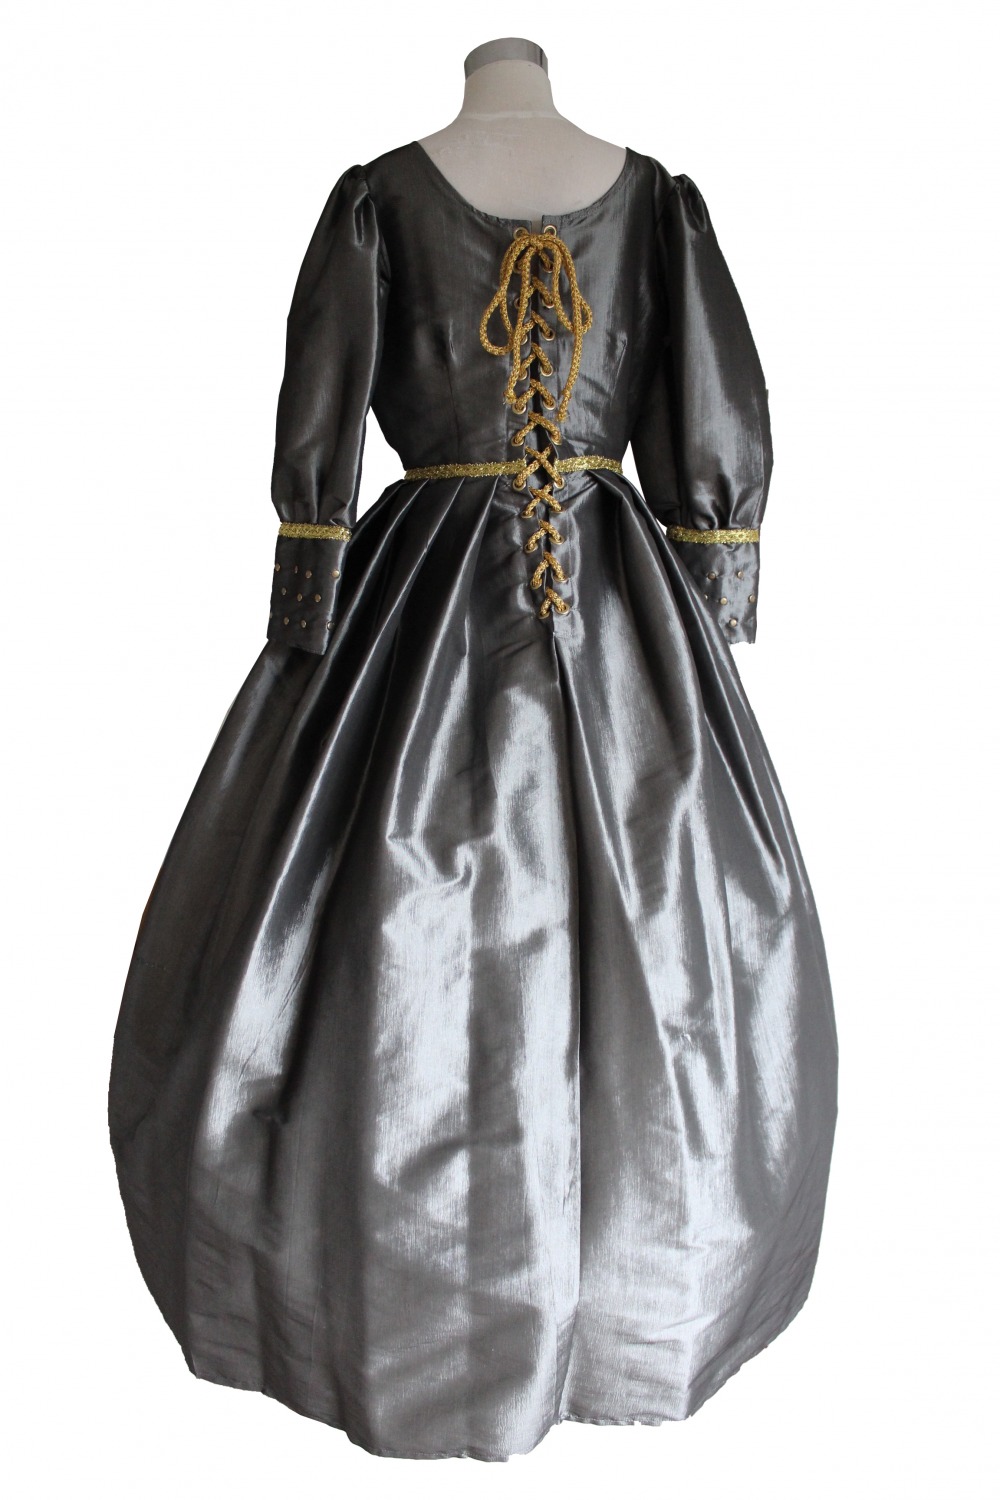 Ladies/ Older Girl's Petite Medieval Tudor Elizabethan Costume Size 6 - 8  Image